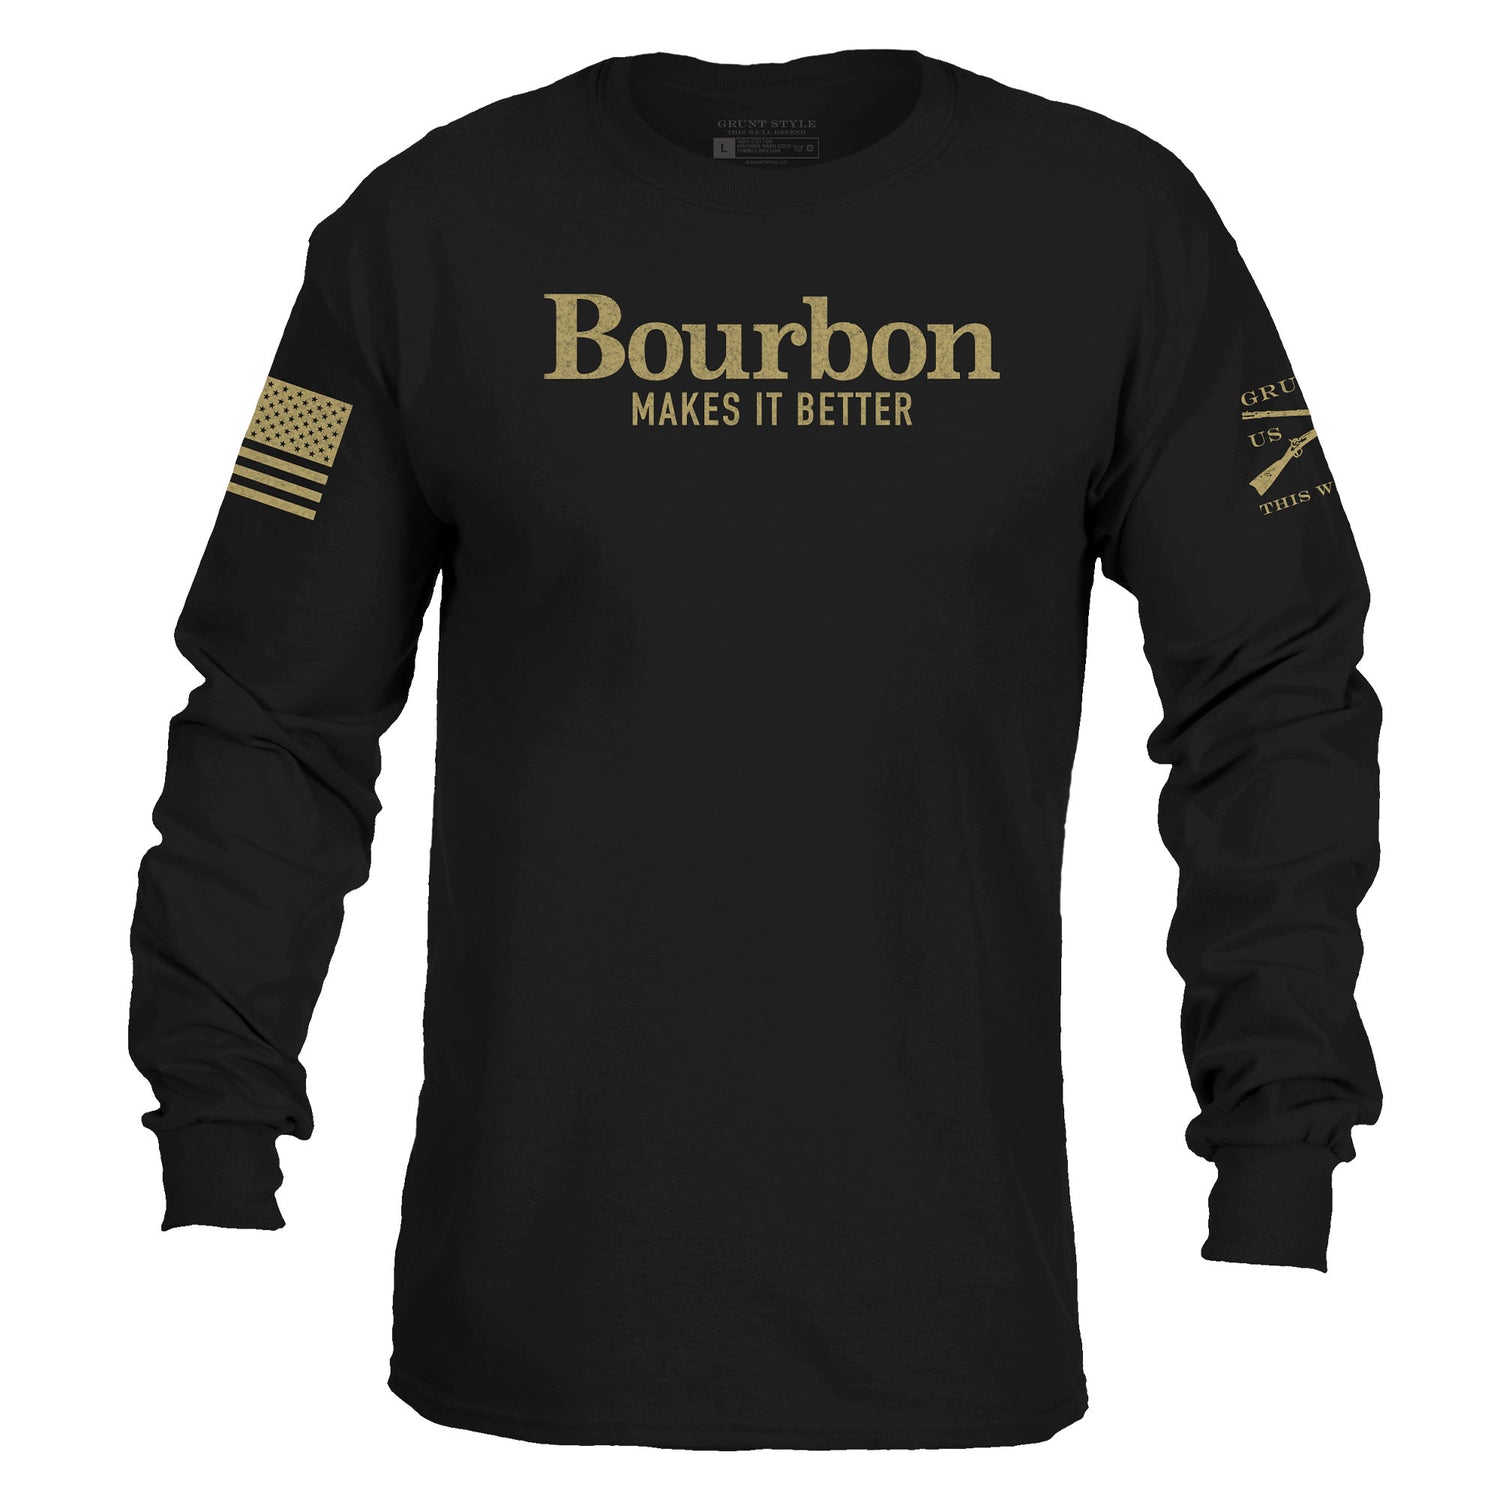 Patriotic Drinking Shirts - Bourbon Makes It Better 